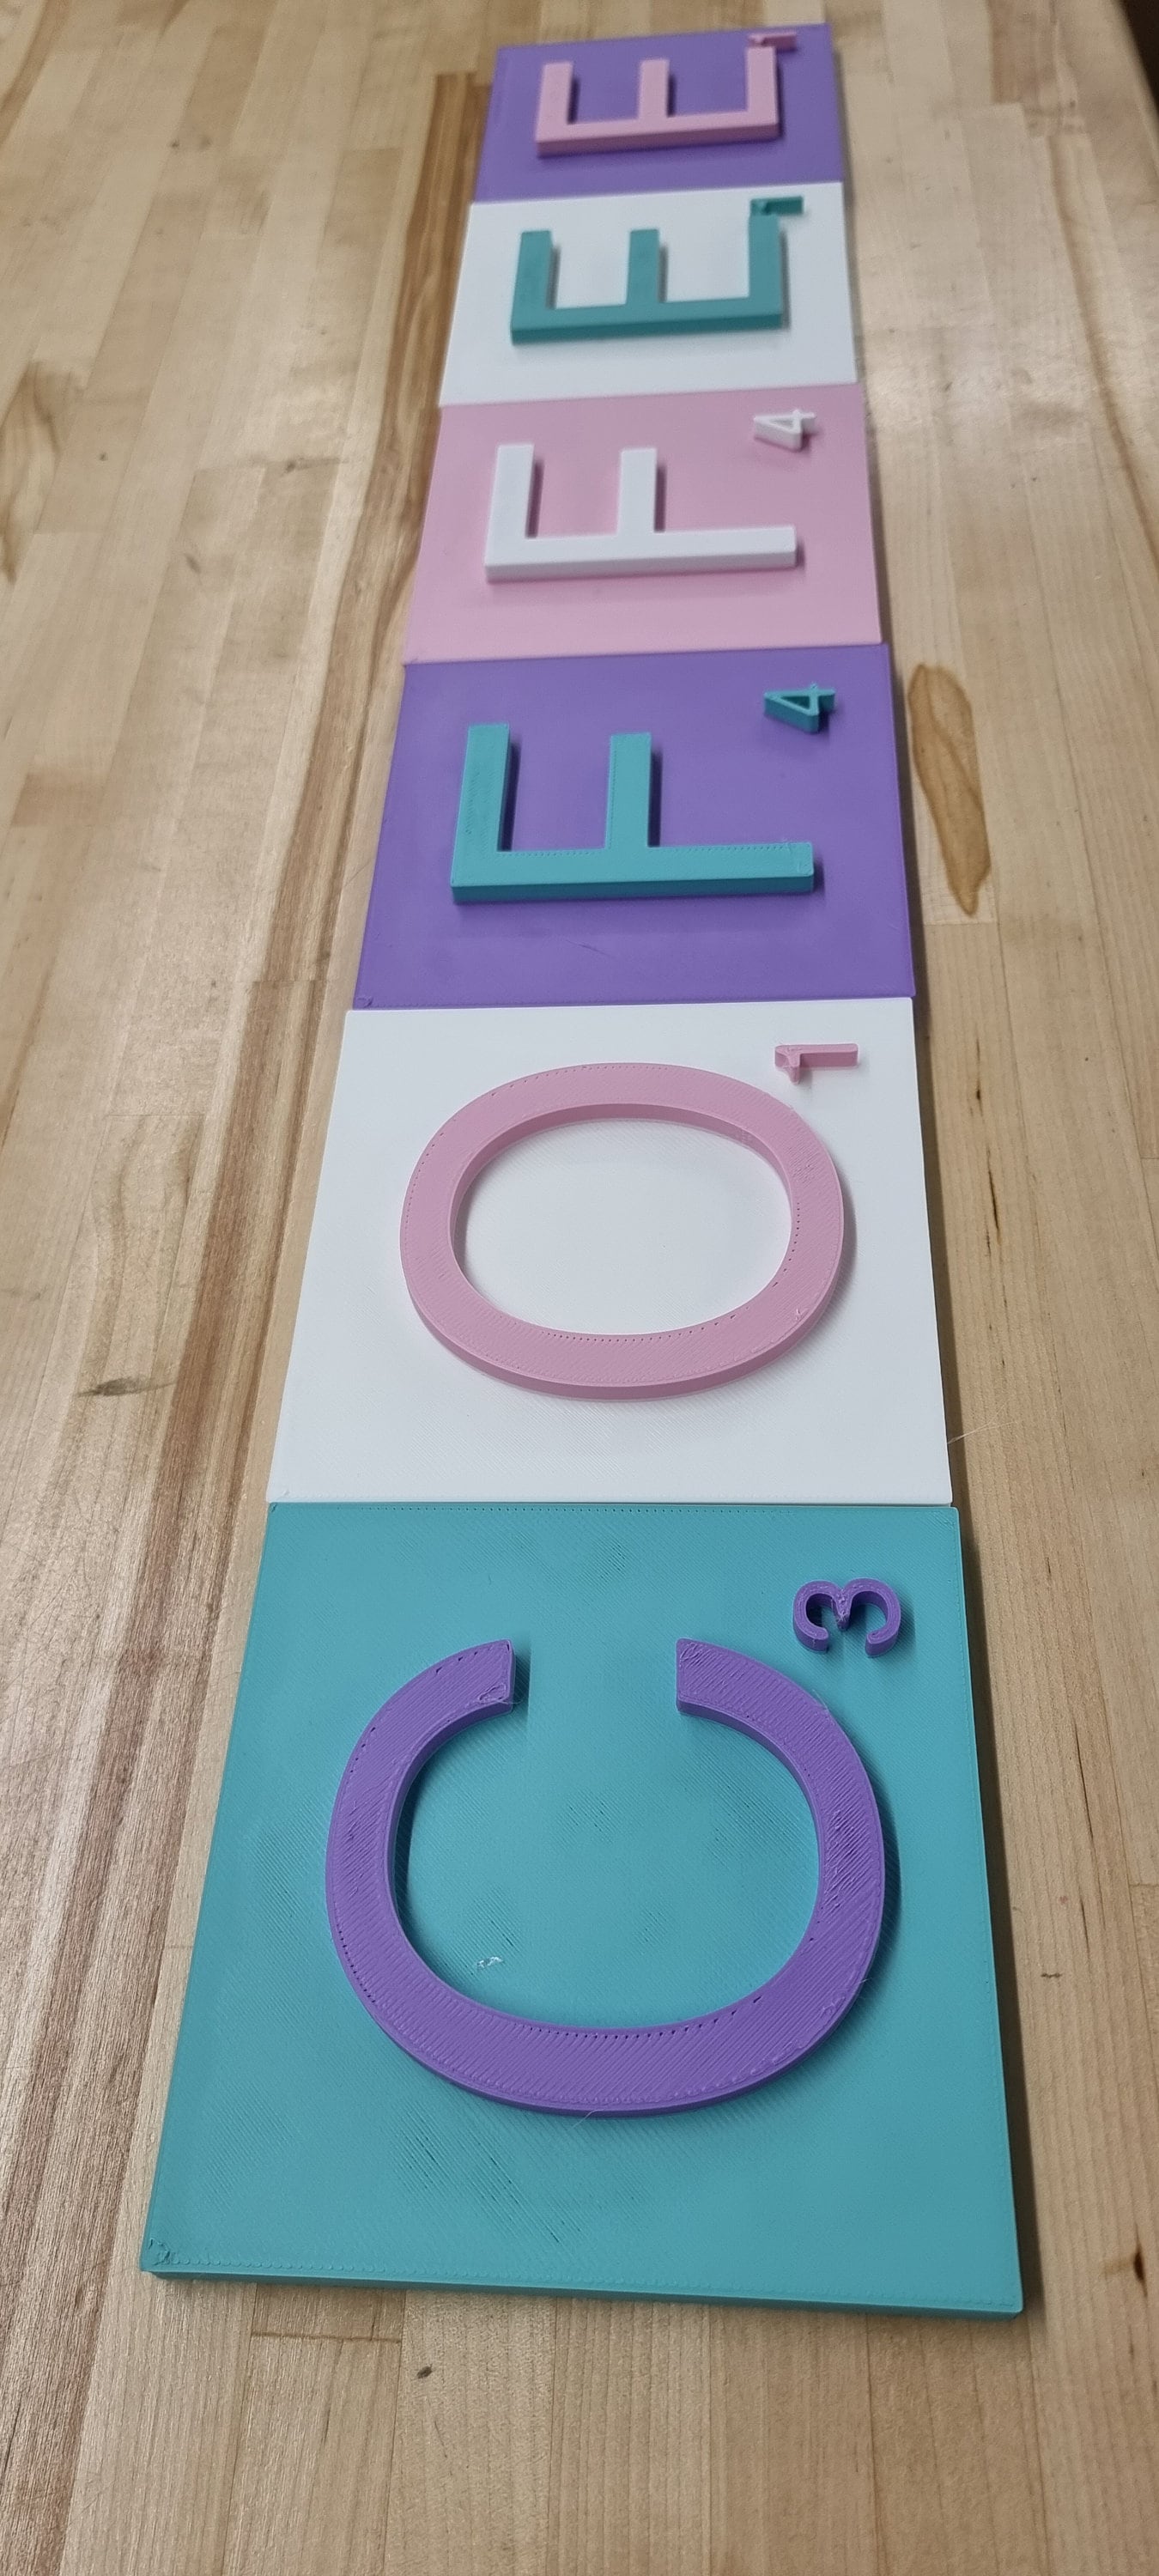 3D Effect Board Game Sign Letter Tiles - 7 Inch. Modern Look 3D Effect Sign Letter Tiles In Tons Of Colors!